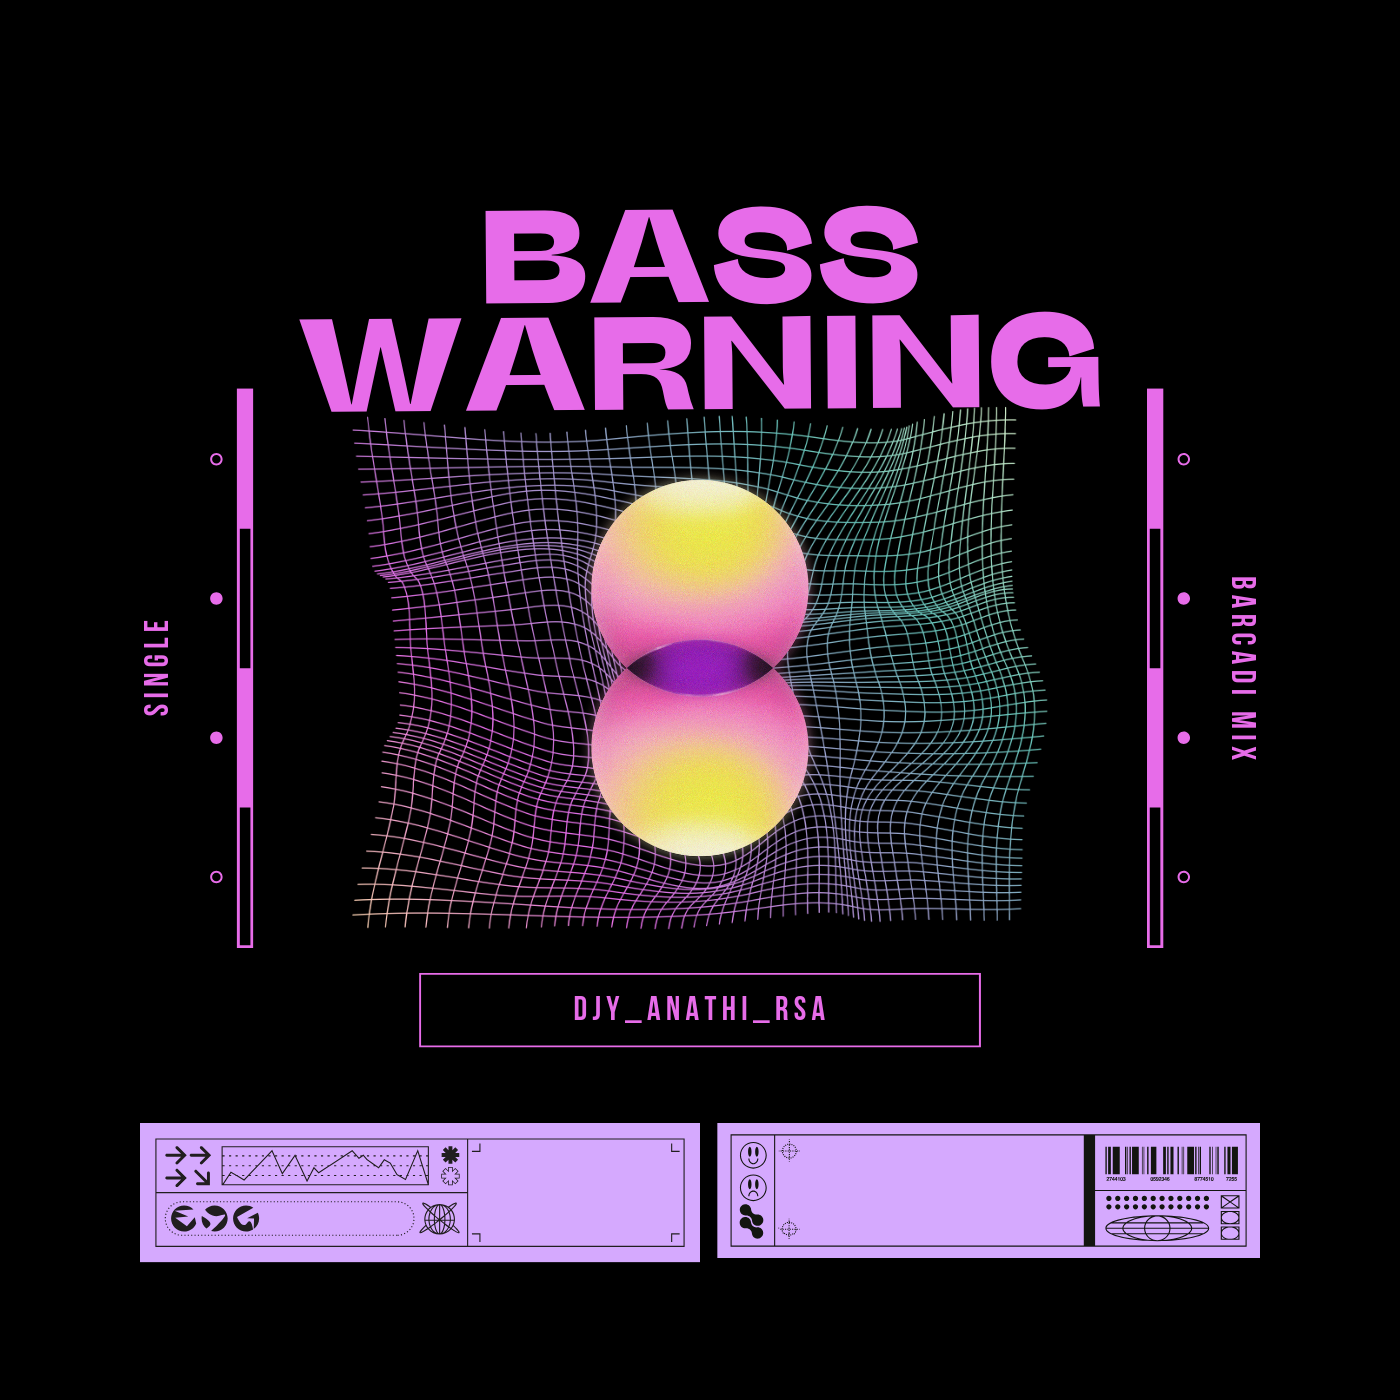 Bass warning - Djy_Anathi_Rsa